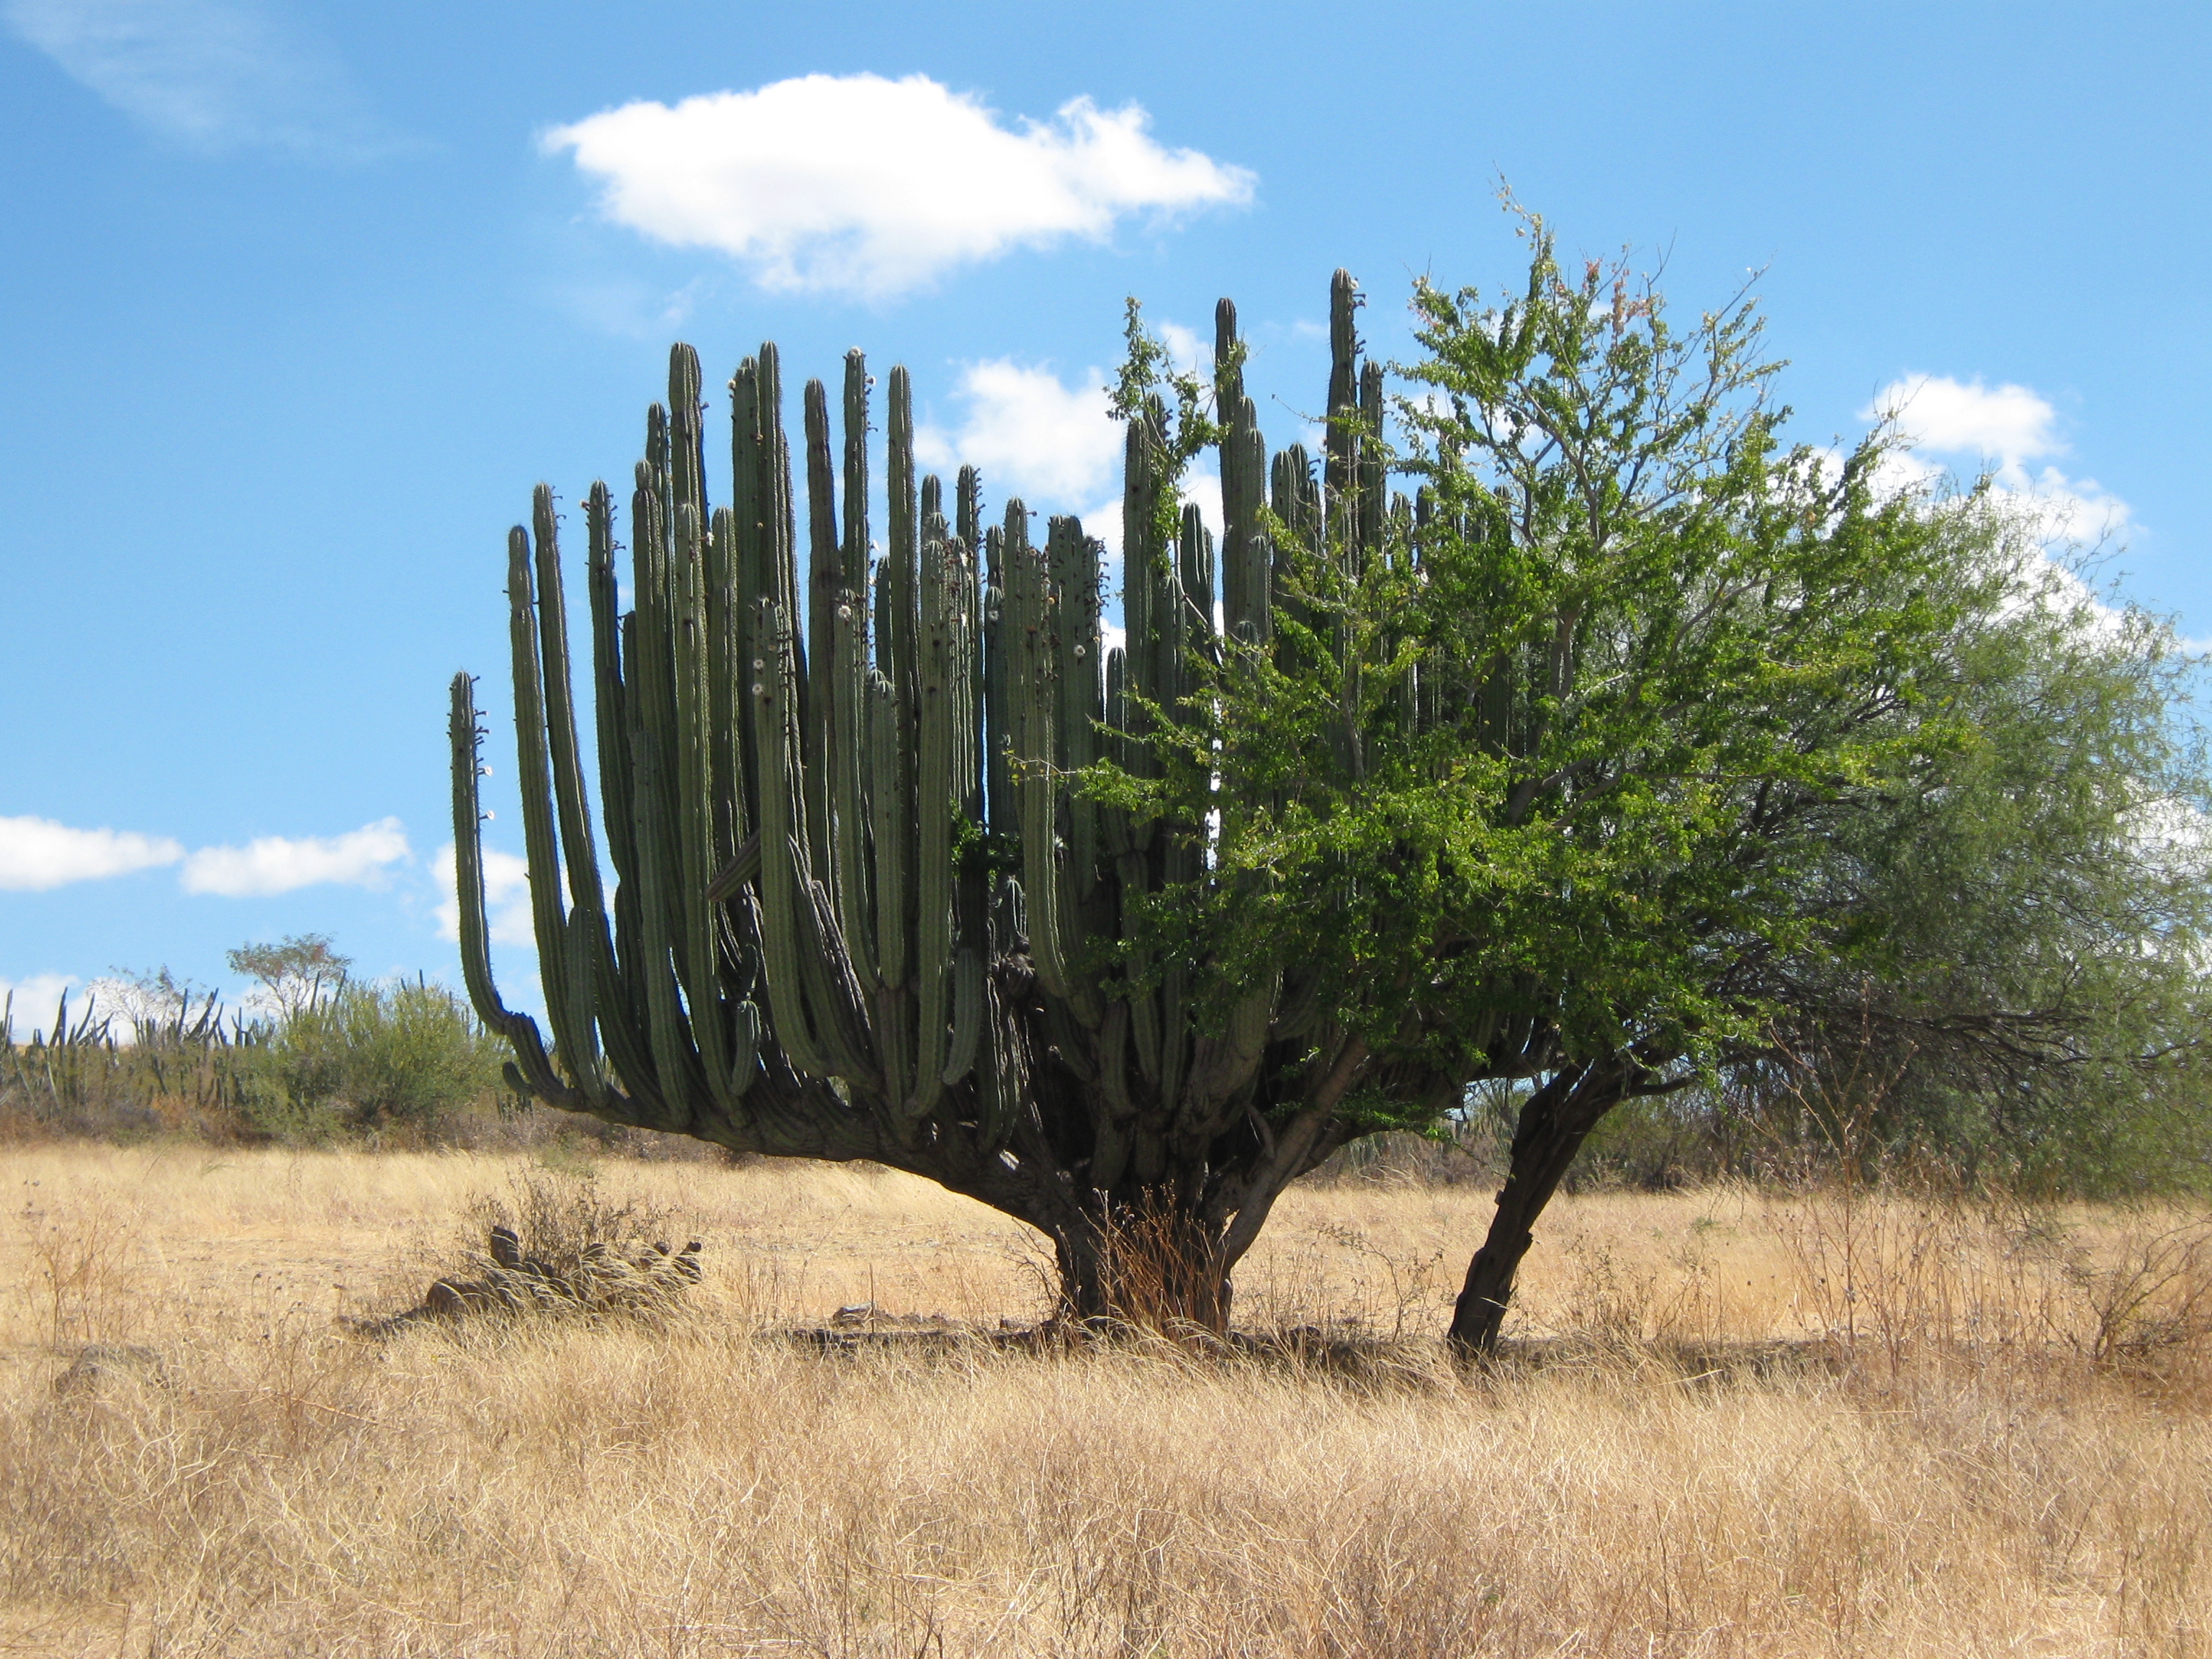 Giant Cactus Tree Reader Photos - Cactus Jungle